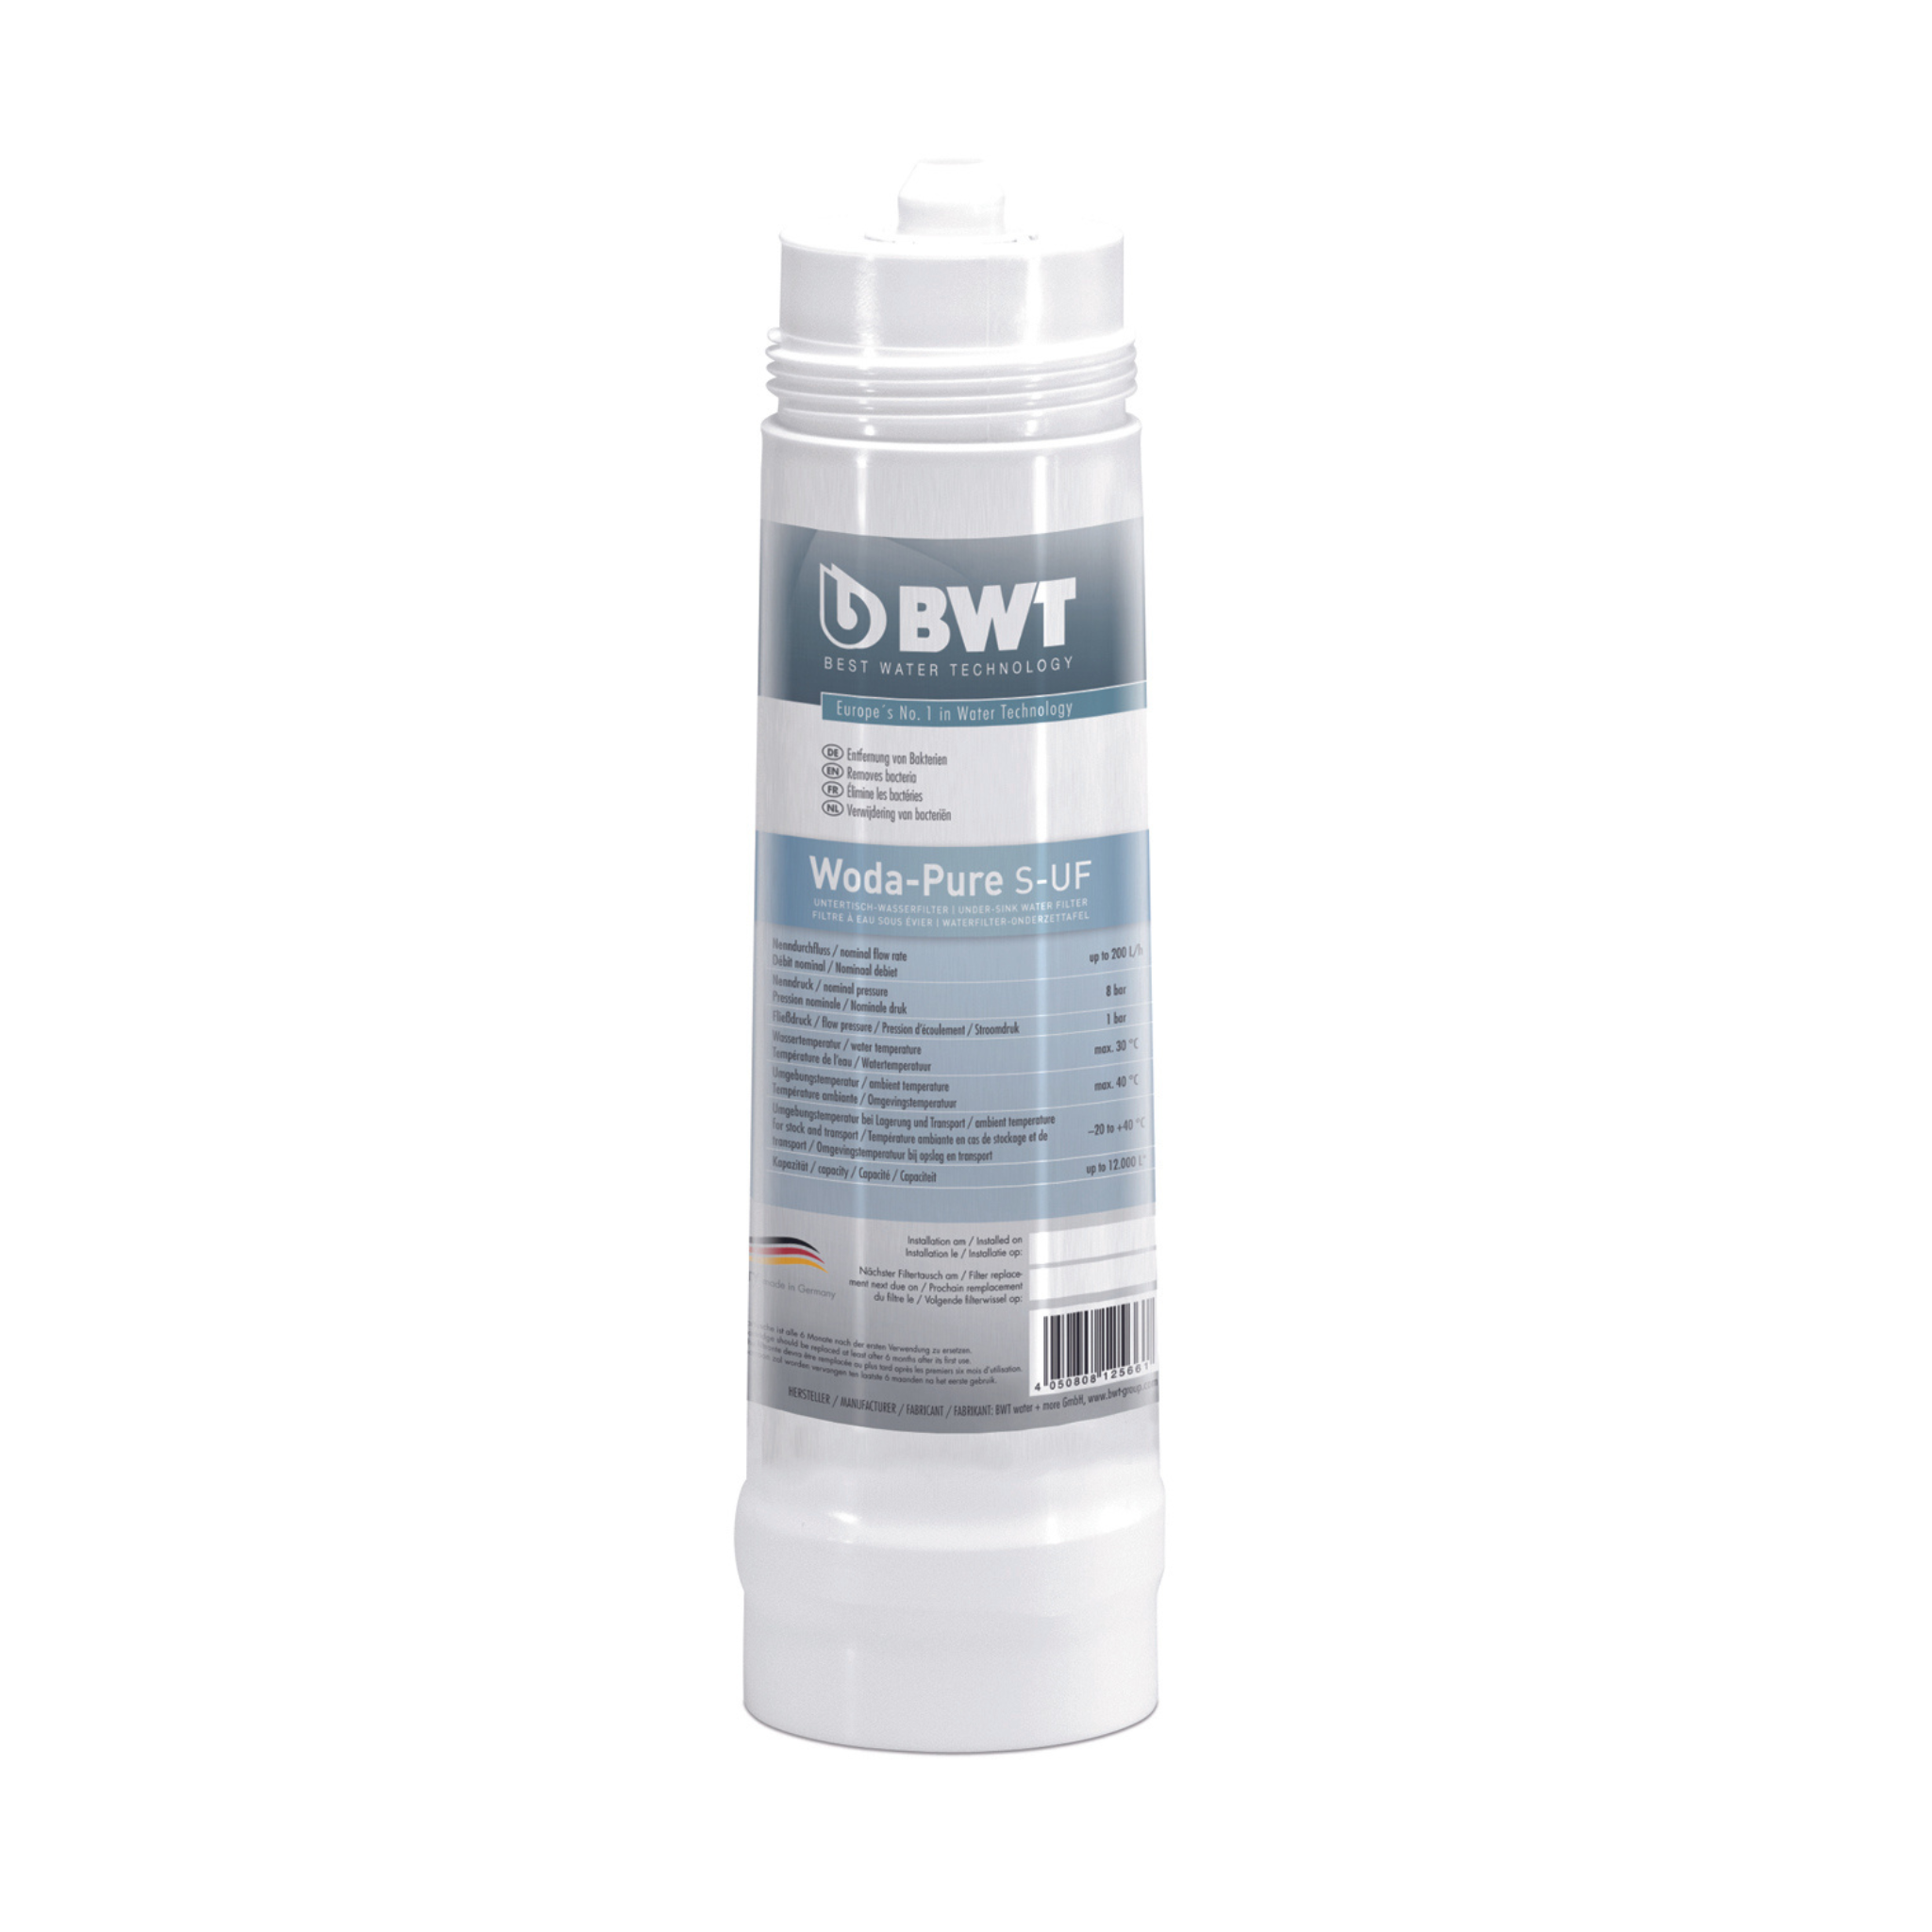 BWT Woda-Pure S-UF | Anti-Bacterial